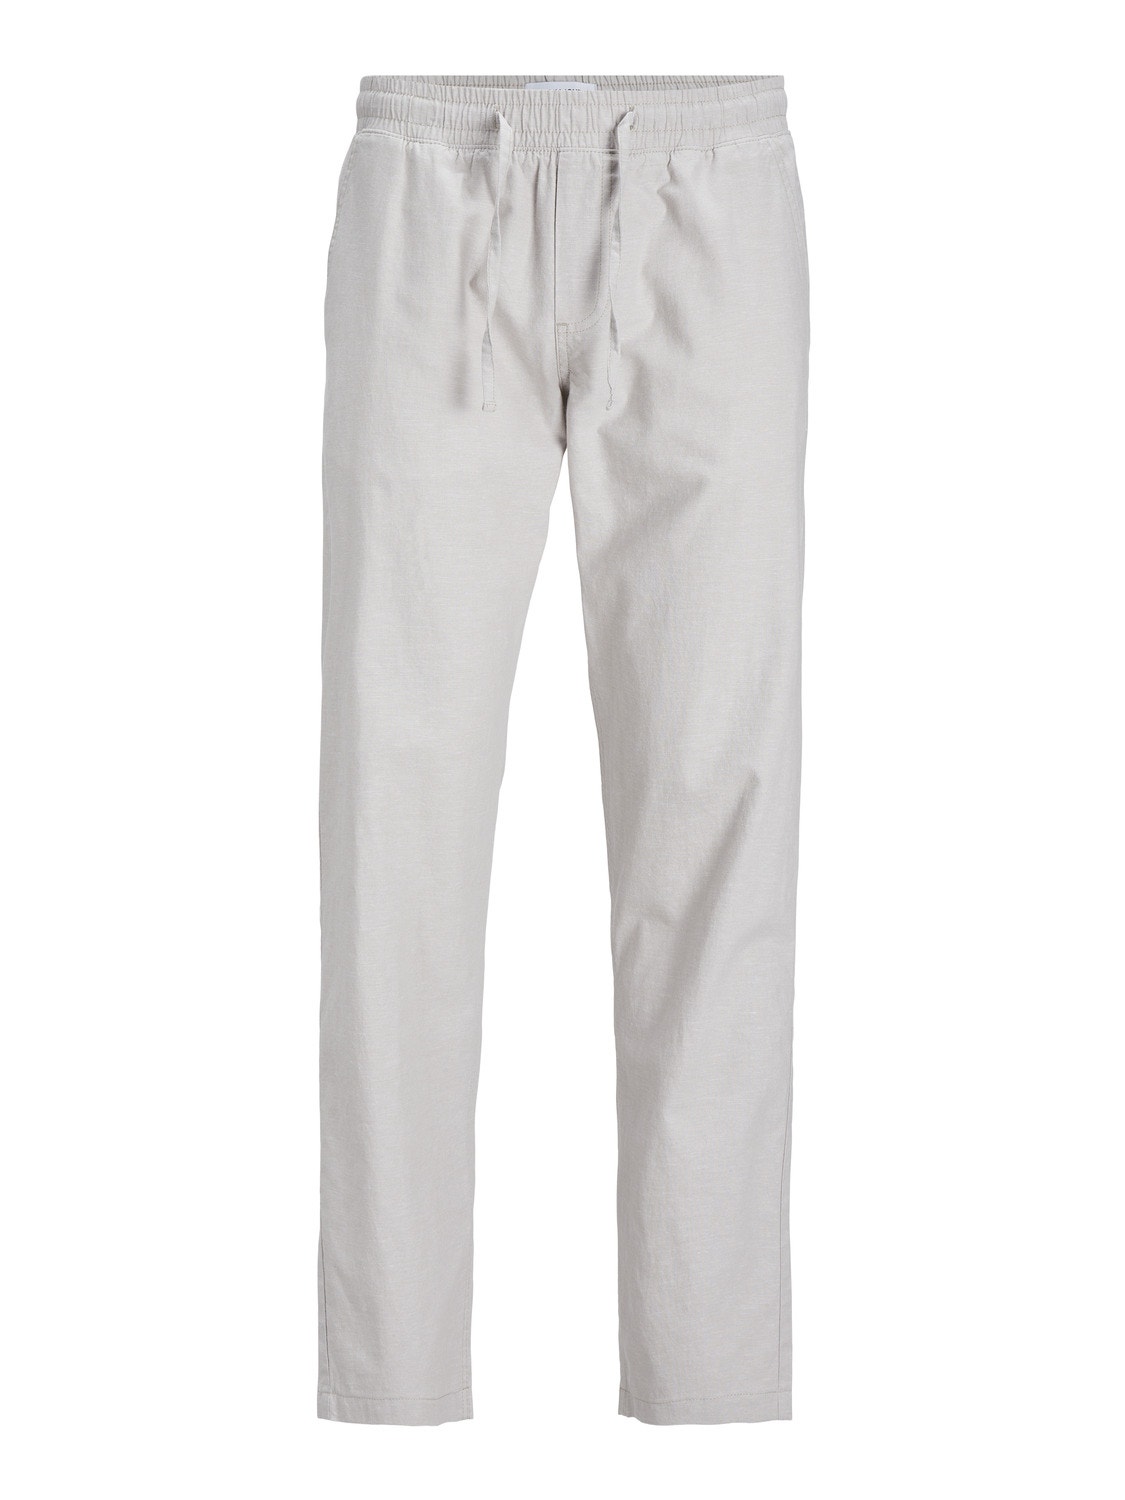 Jack & Jones Relaxed Fit Classic trousers -Crockery - 12248606